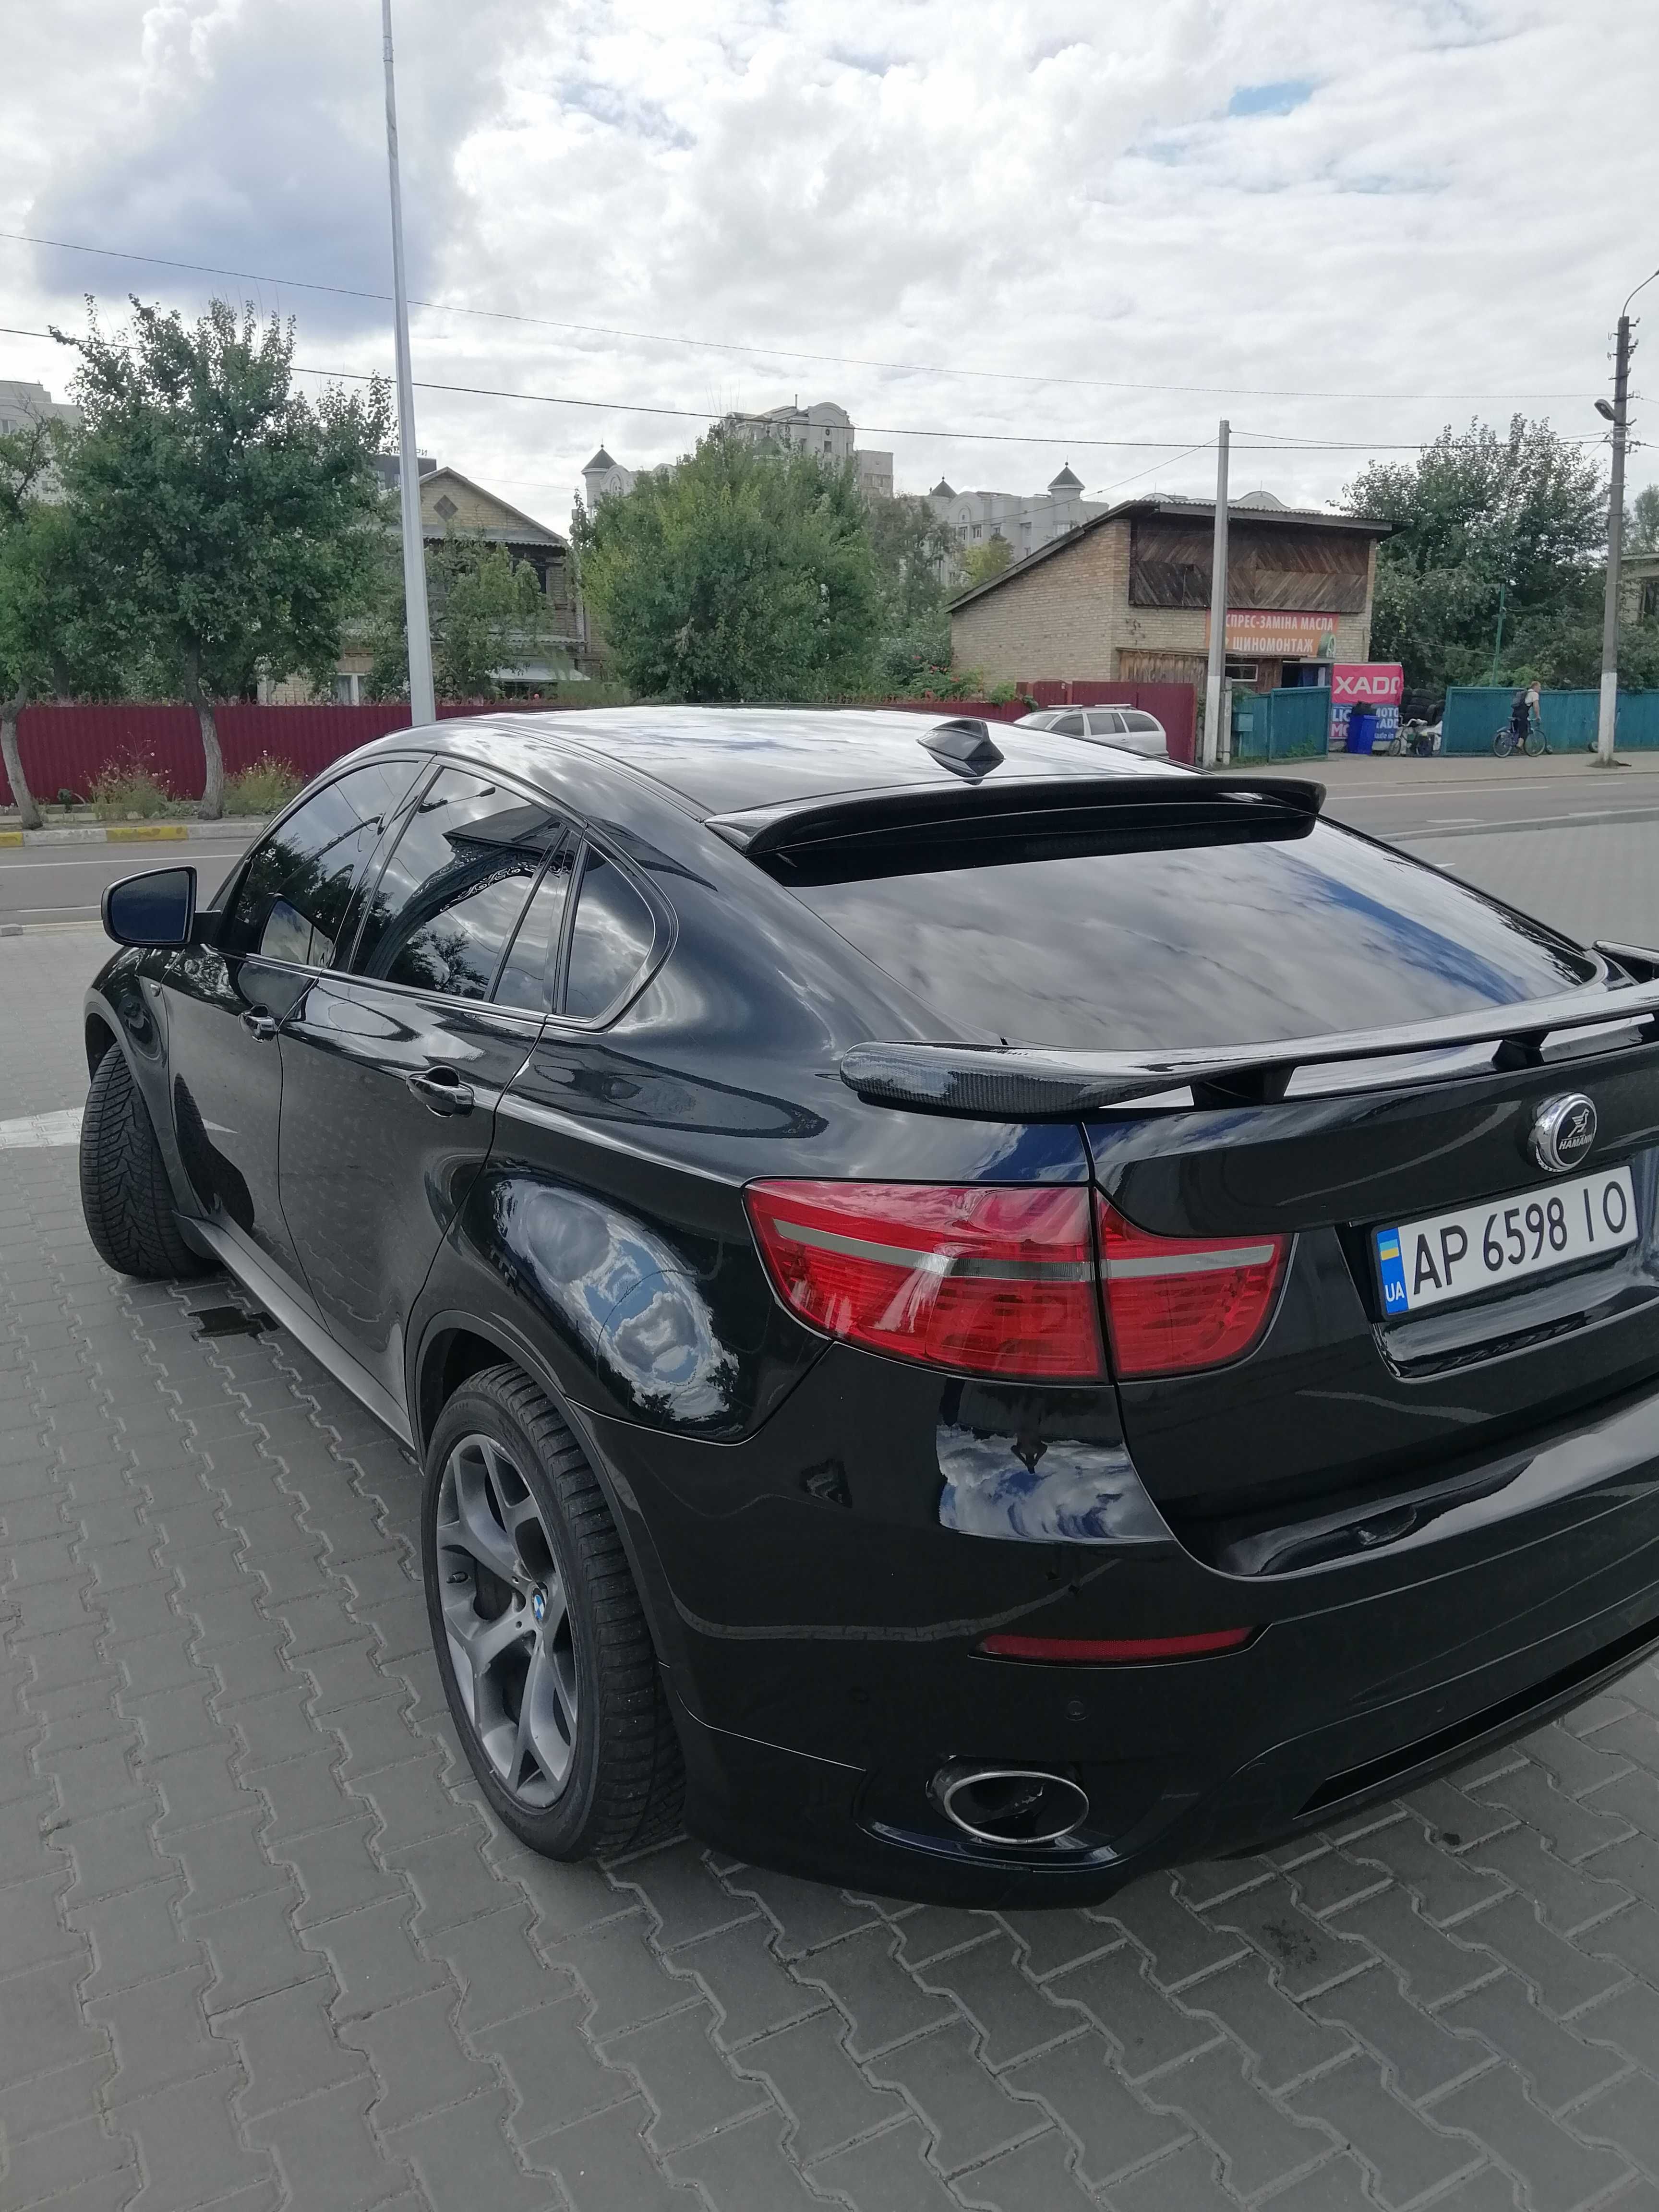 Продам BMW x6 в обвесе хаманн